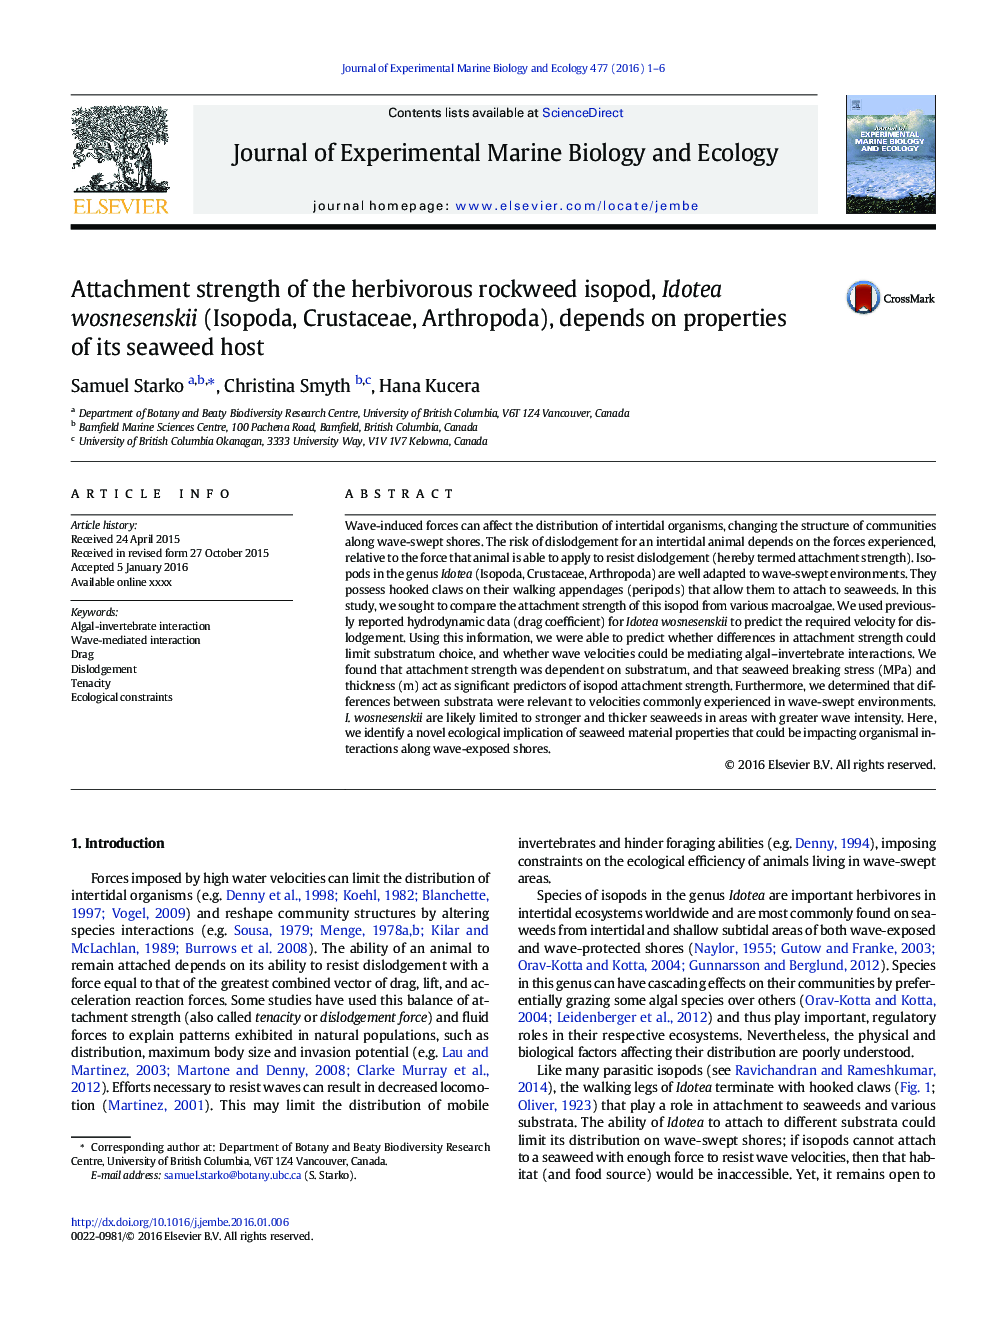 Attachment strength of the herbivorous rockweed isopod, Idotea wosnesenskii (Isopoda, Crustaceae, Arthropoda), depends on properties of its seaweed host